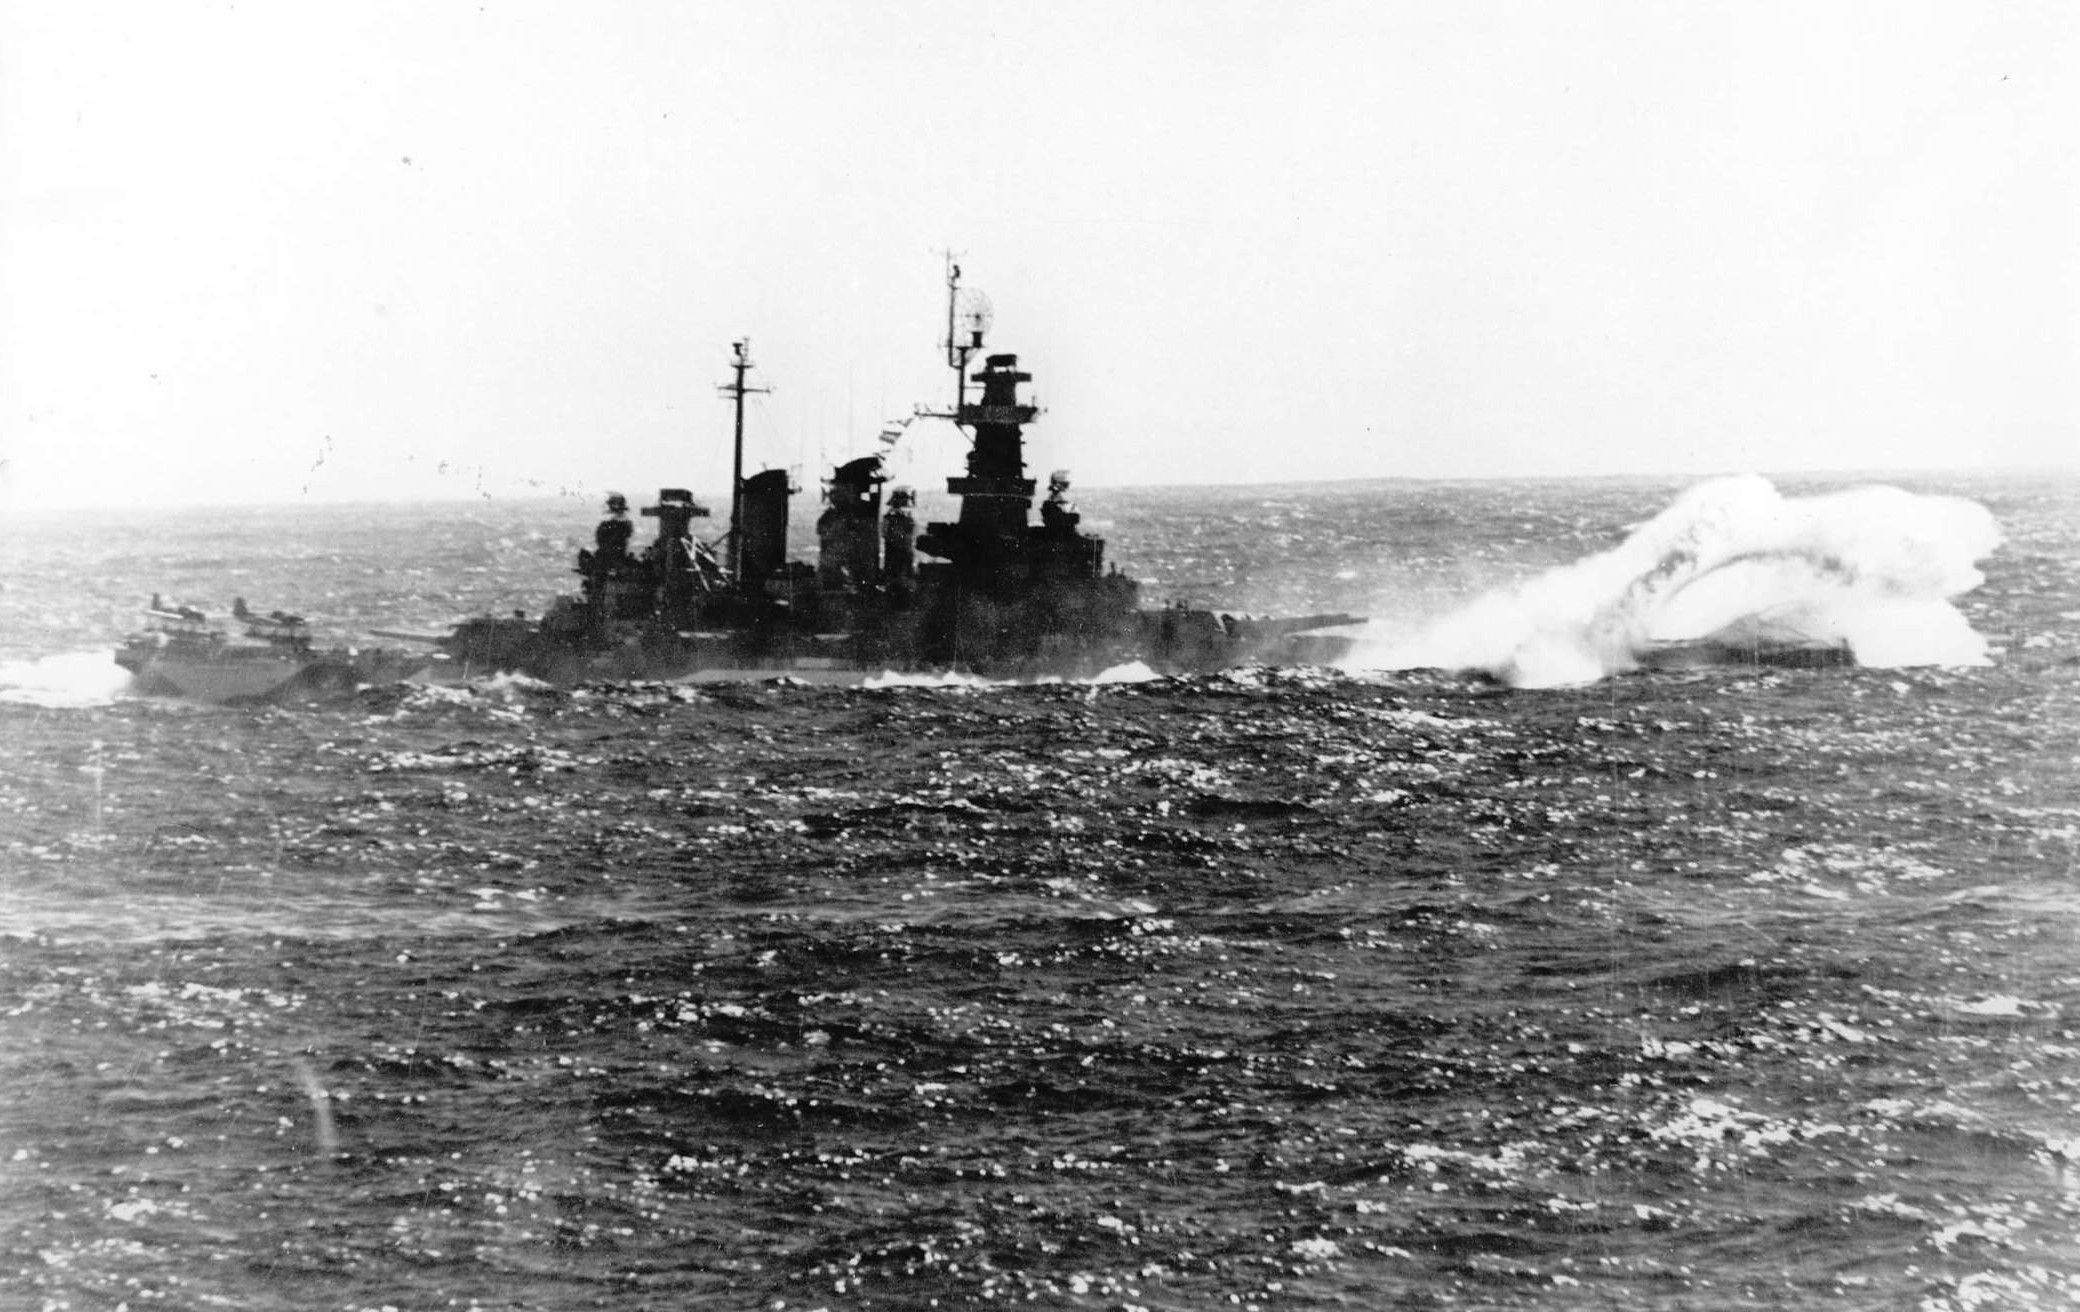 USS North Carolina in heavy seas, off the Philippine Islands, 12 Dec 1944, photo 2 of 2